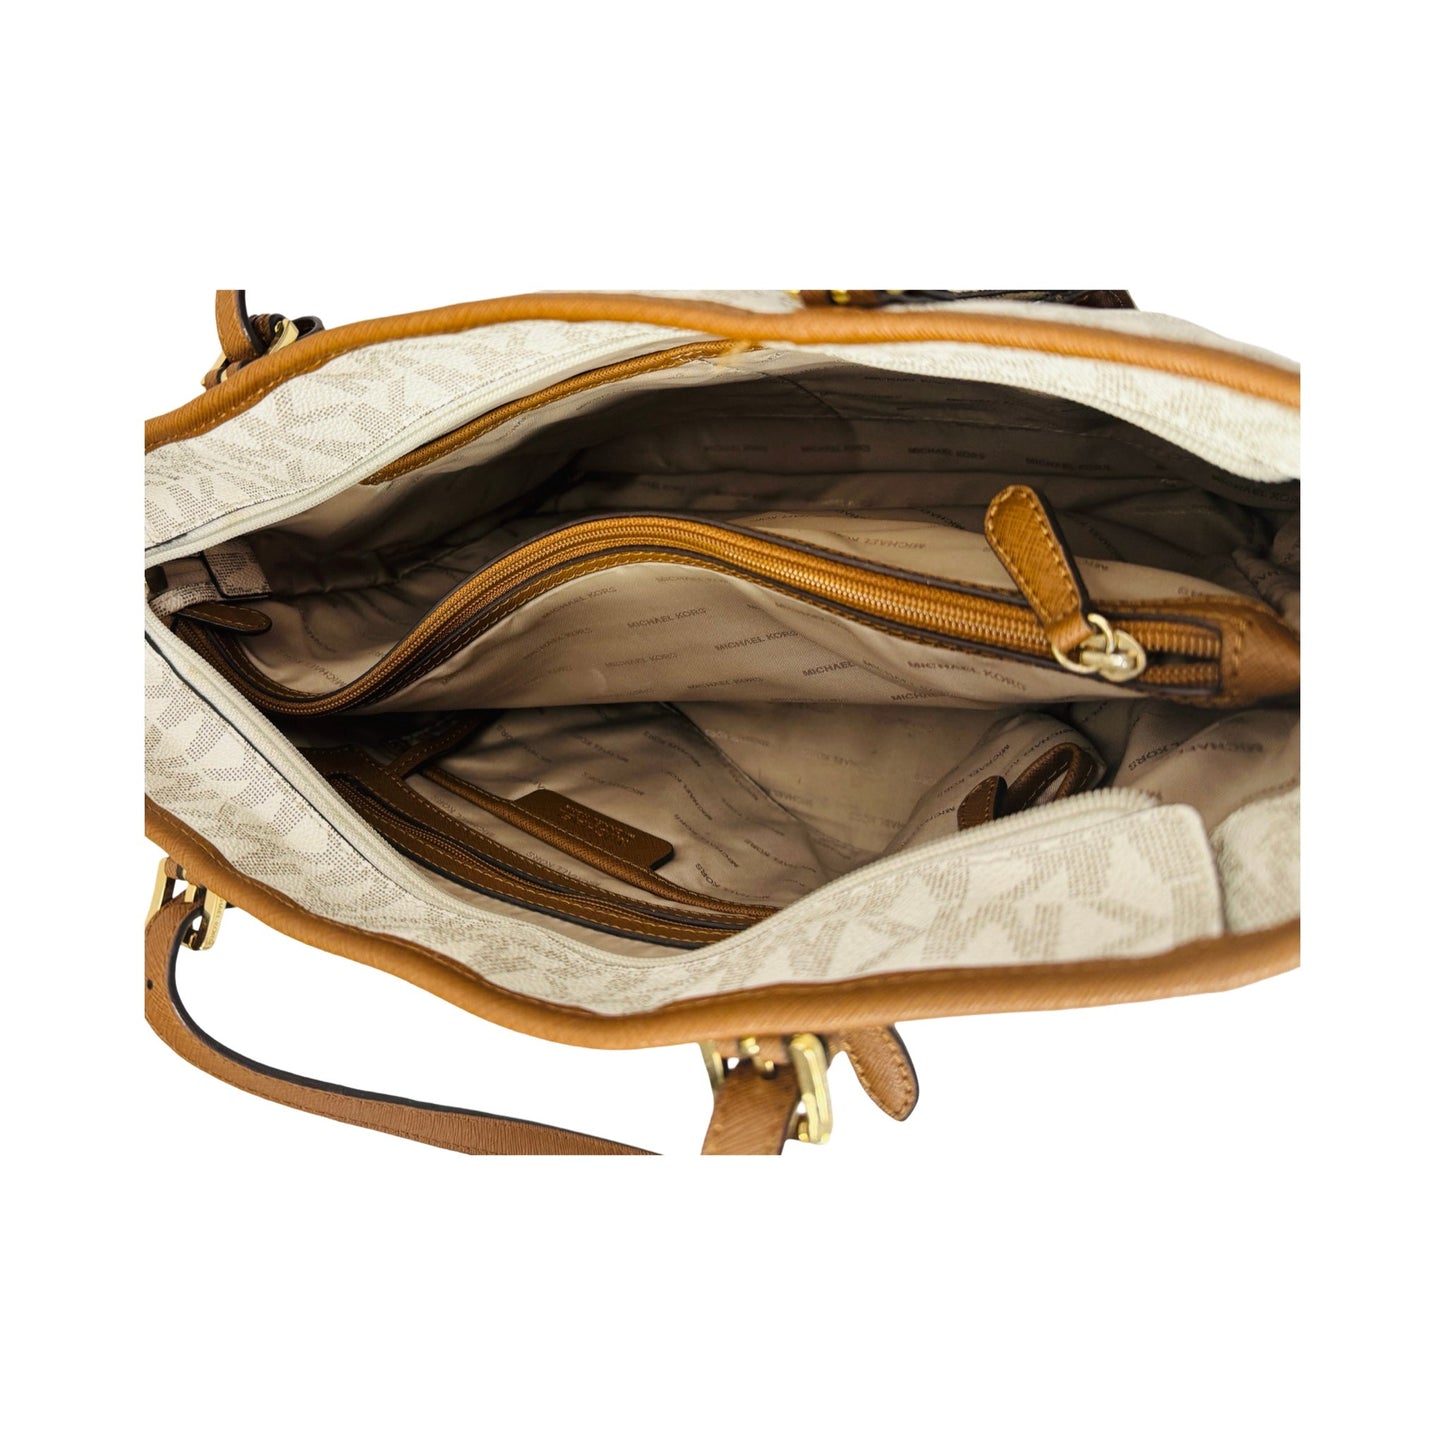 Ciara Signature PVC Leather Top Zip Gold-Tone Hardware Light Brown Leather Trim Vanilla White Tote Shoulder Handbag By Michael Kors  Size: Medium